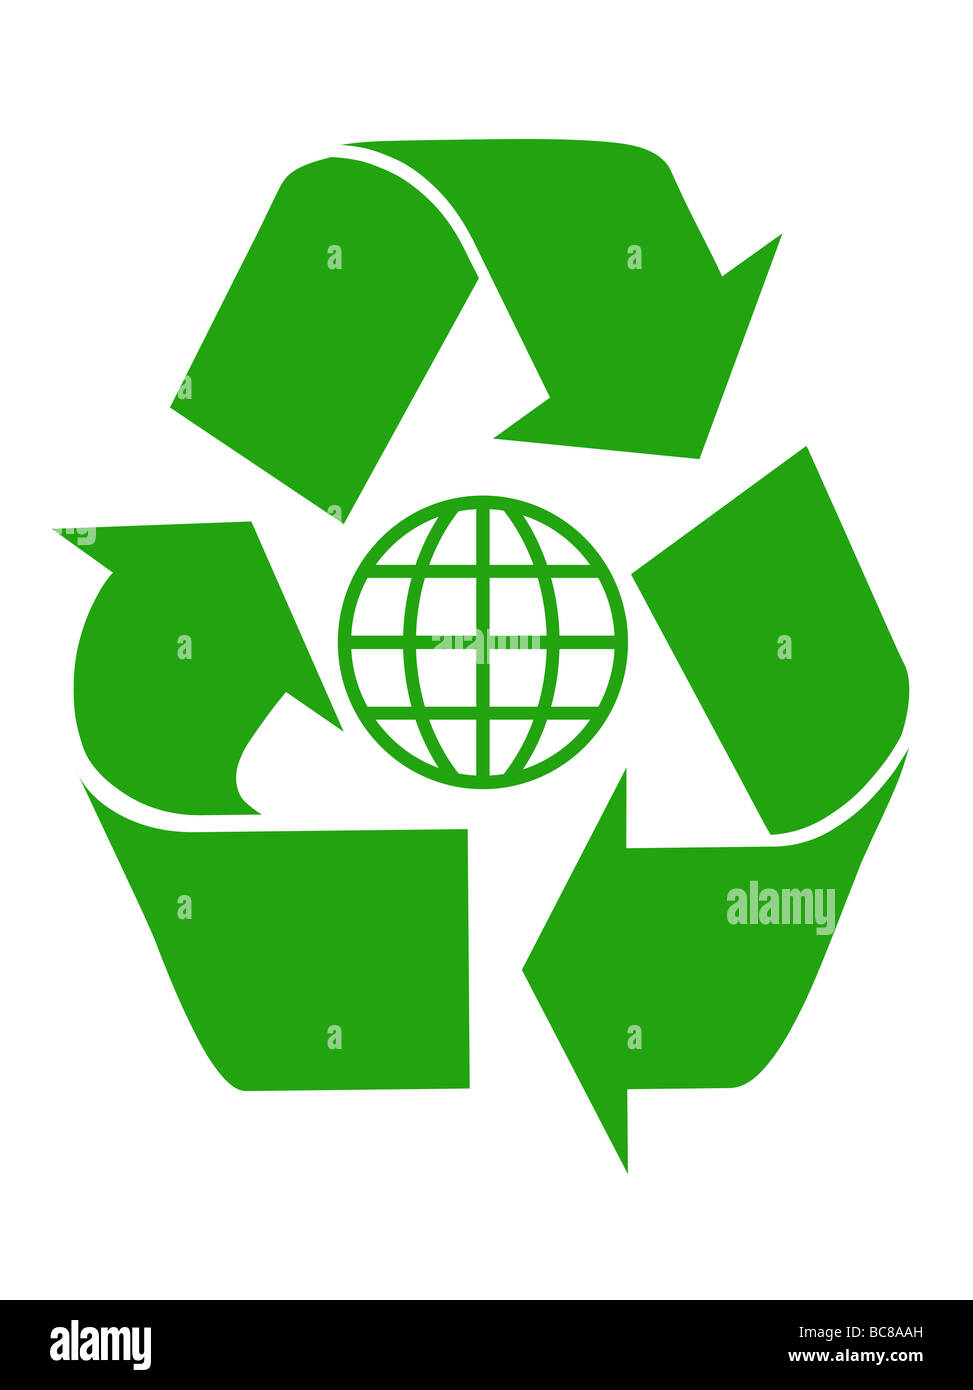 Símbolo de reciclaje global verde aislado sobre fondo blanco. Foto de stock